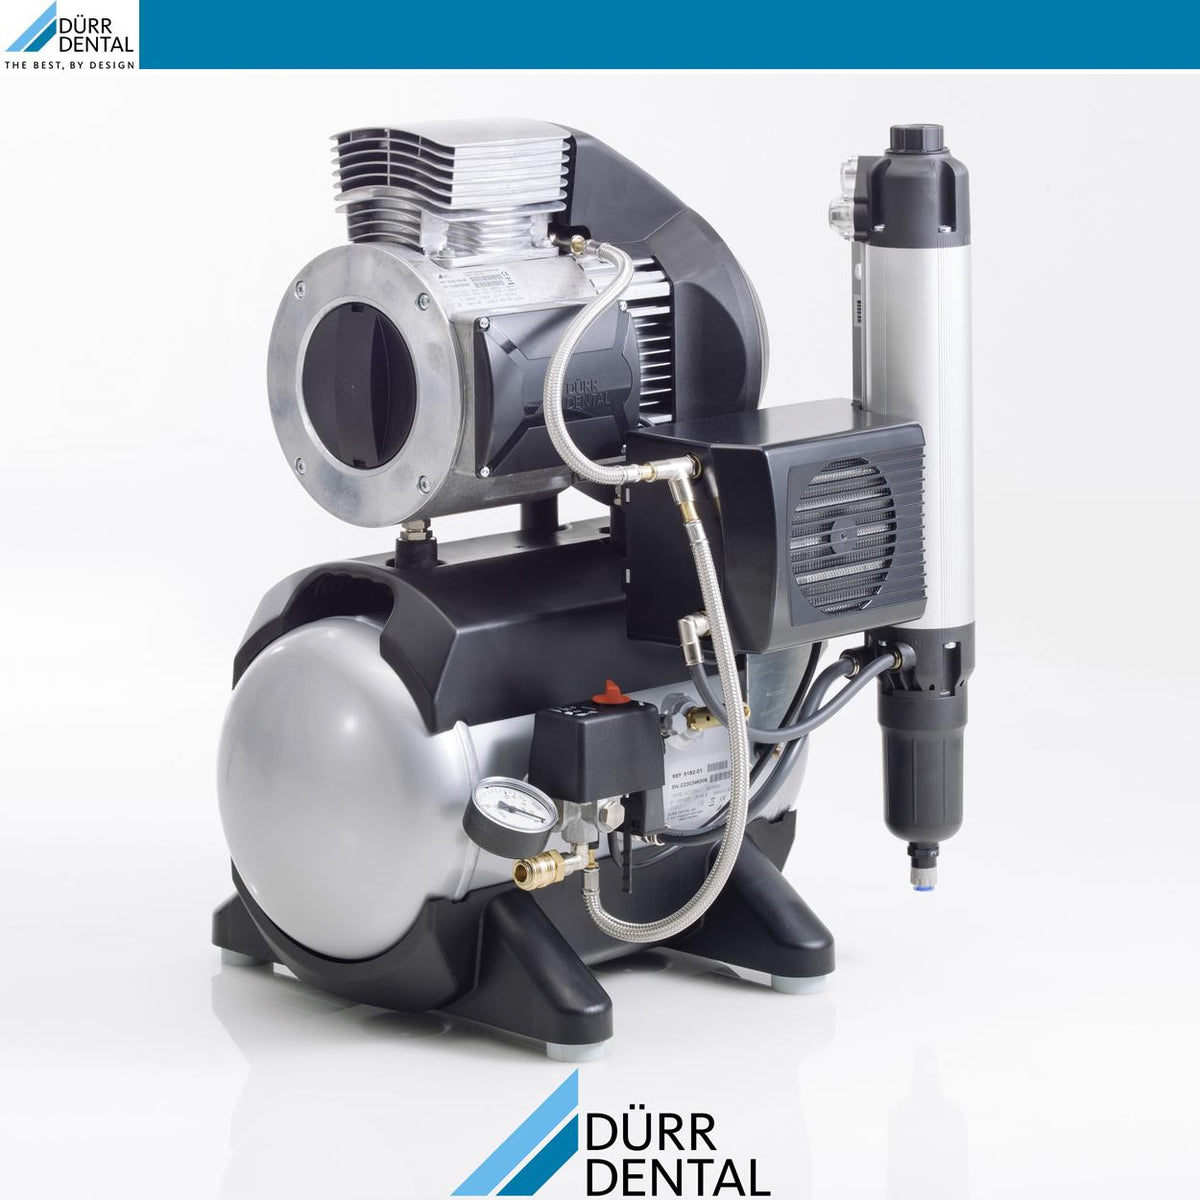 DentrealStore - Dürr Dental Tornado 1 Oil Free Compressor with Dryer